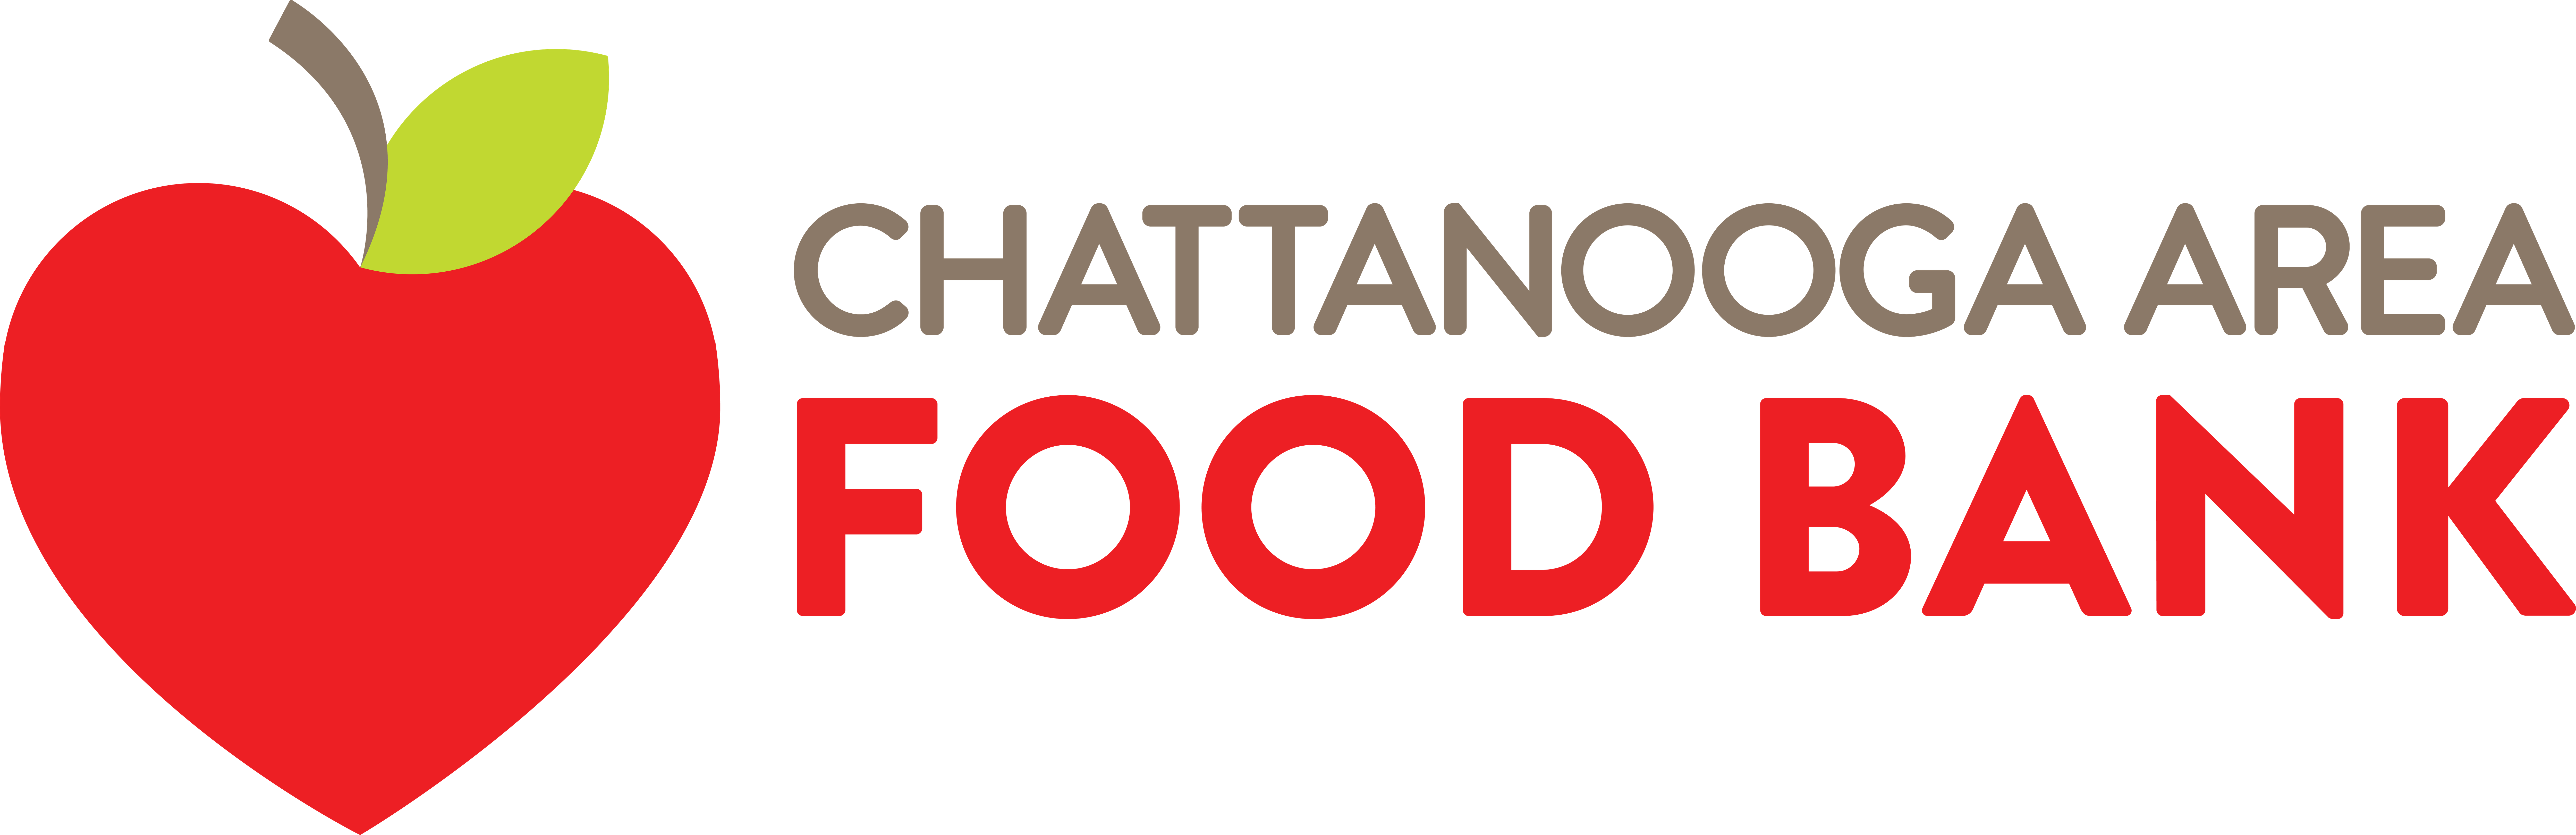 Chattanooga Food Bank Donations